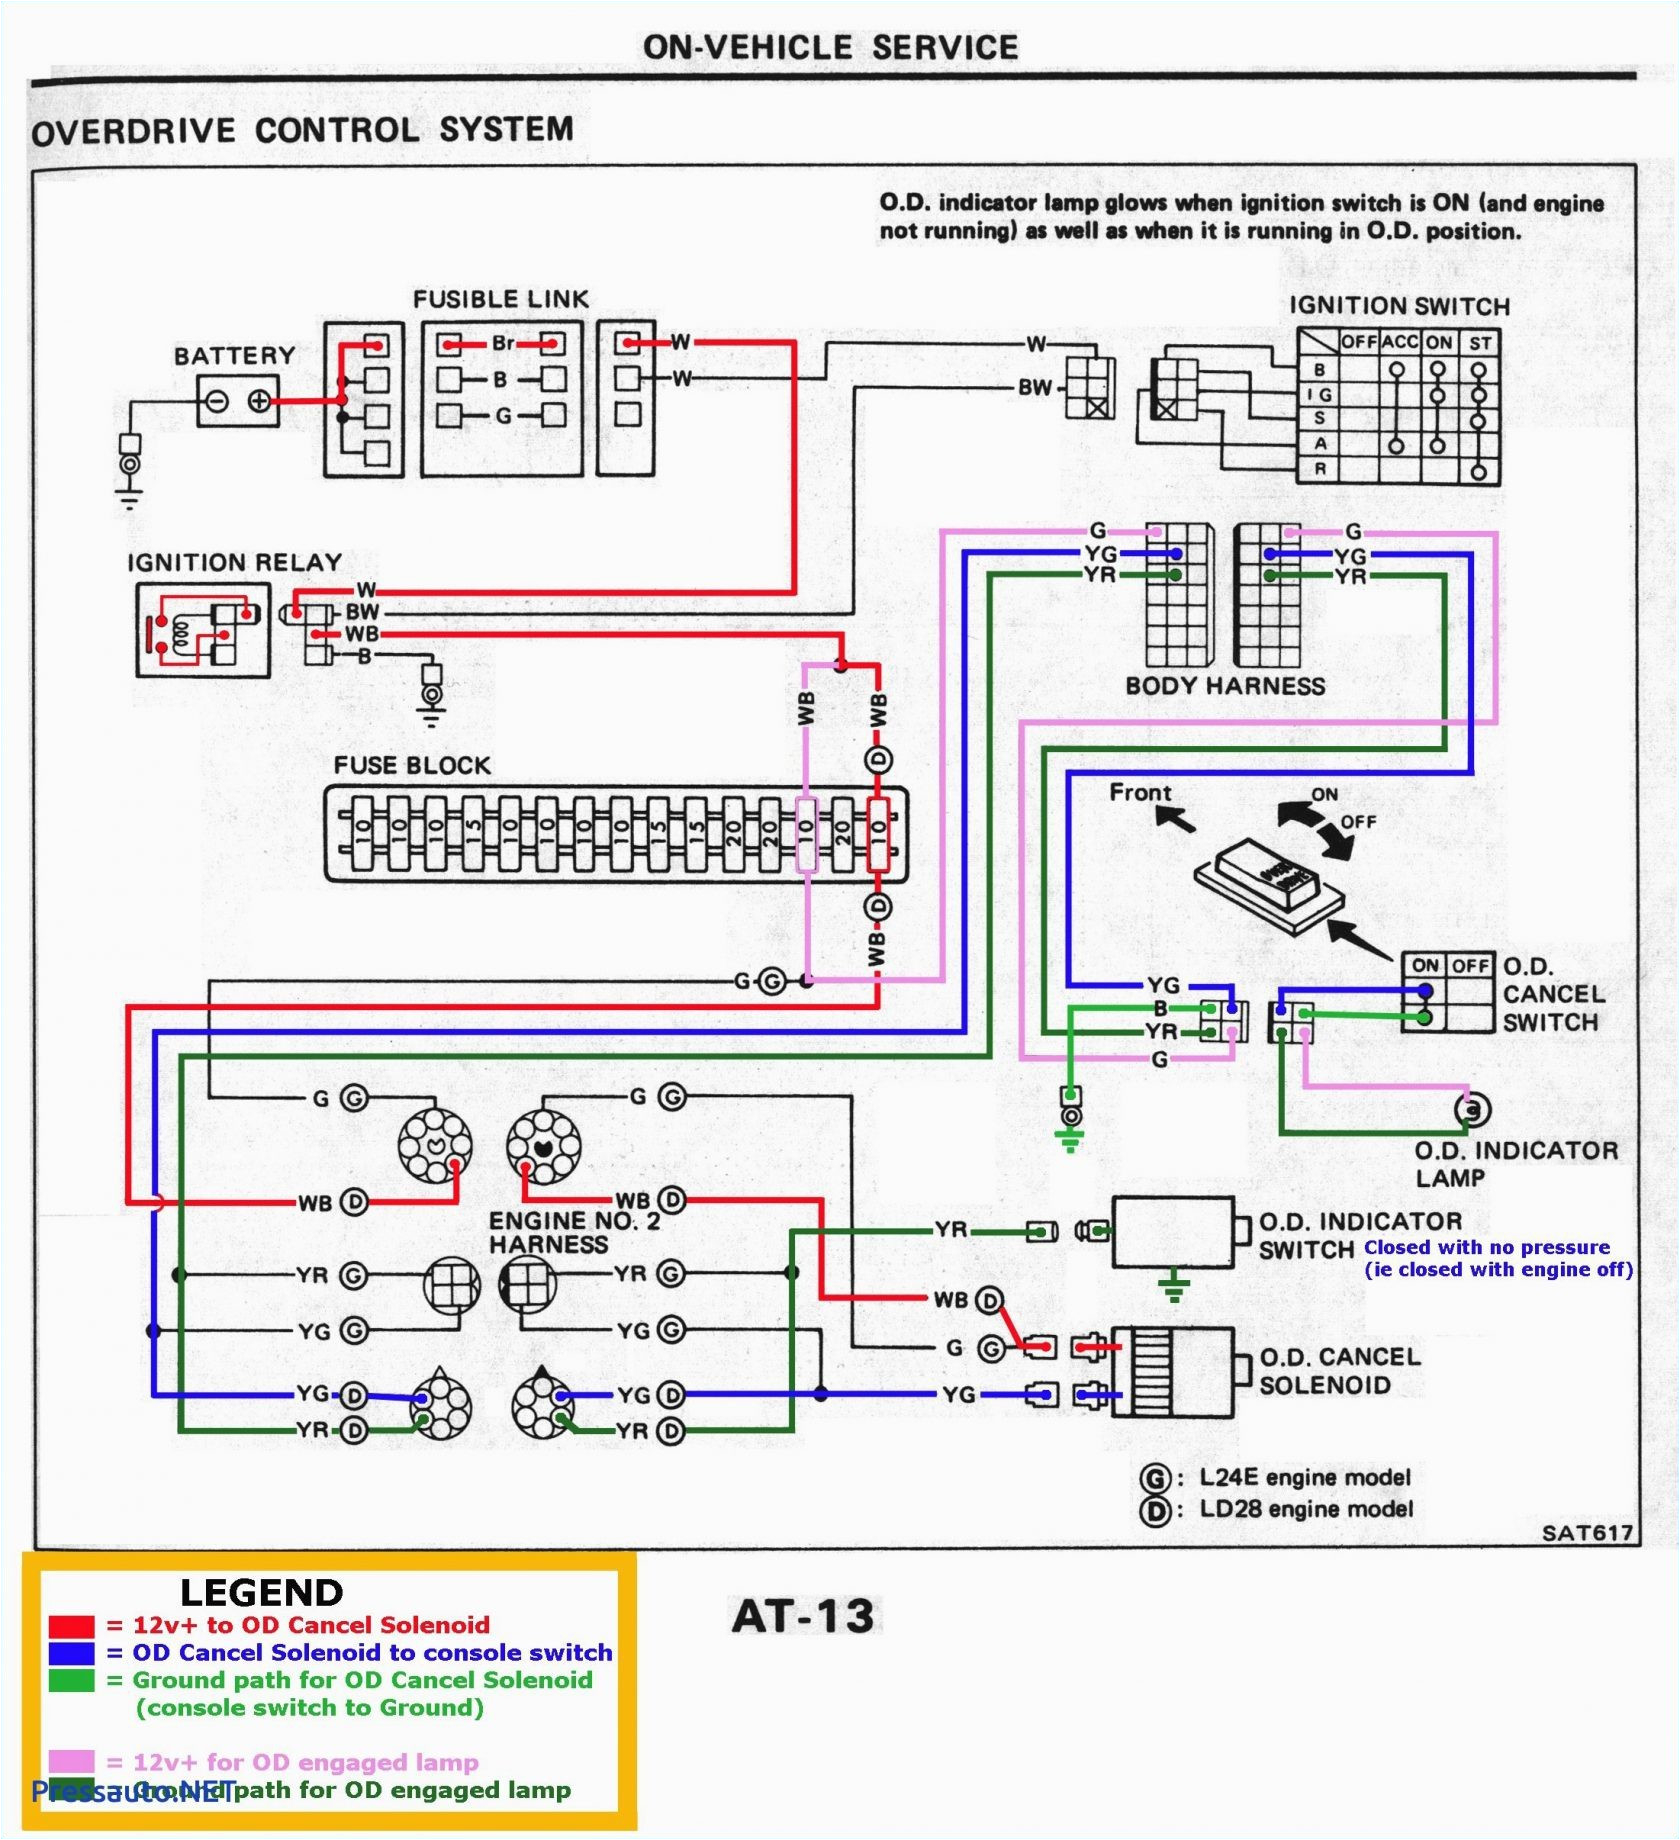 onan wiring harness color code wiring diagram onan wiring harness color code